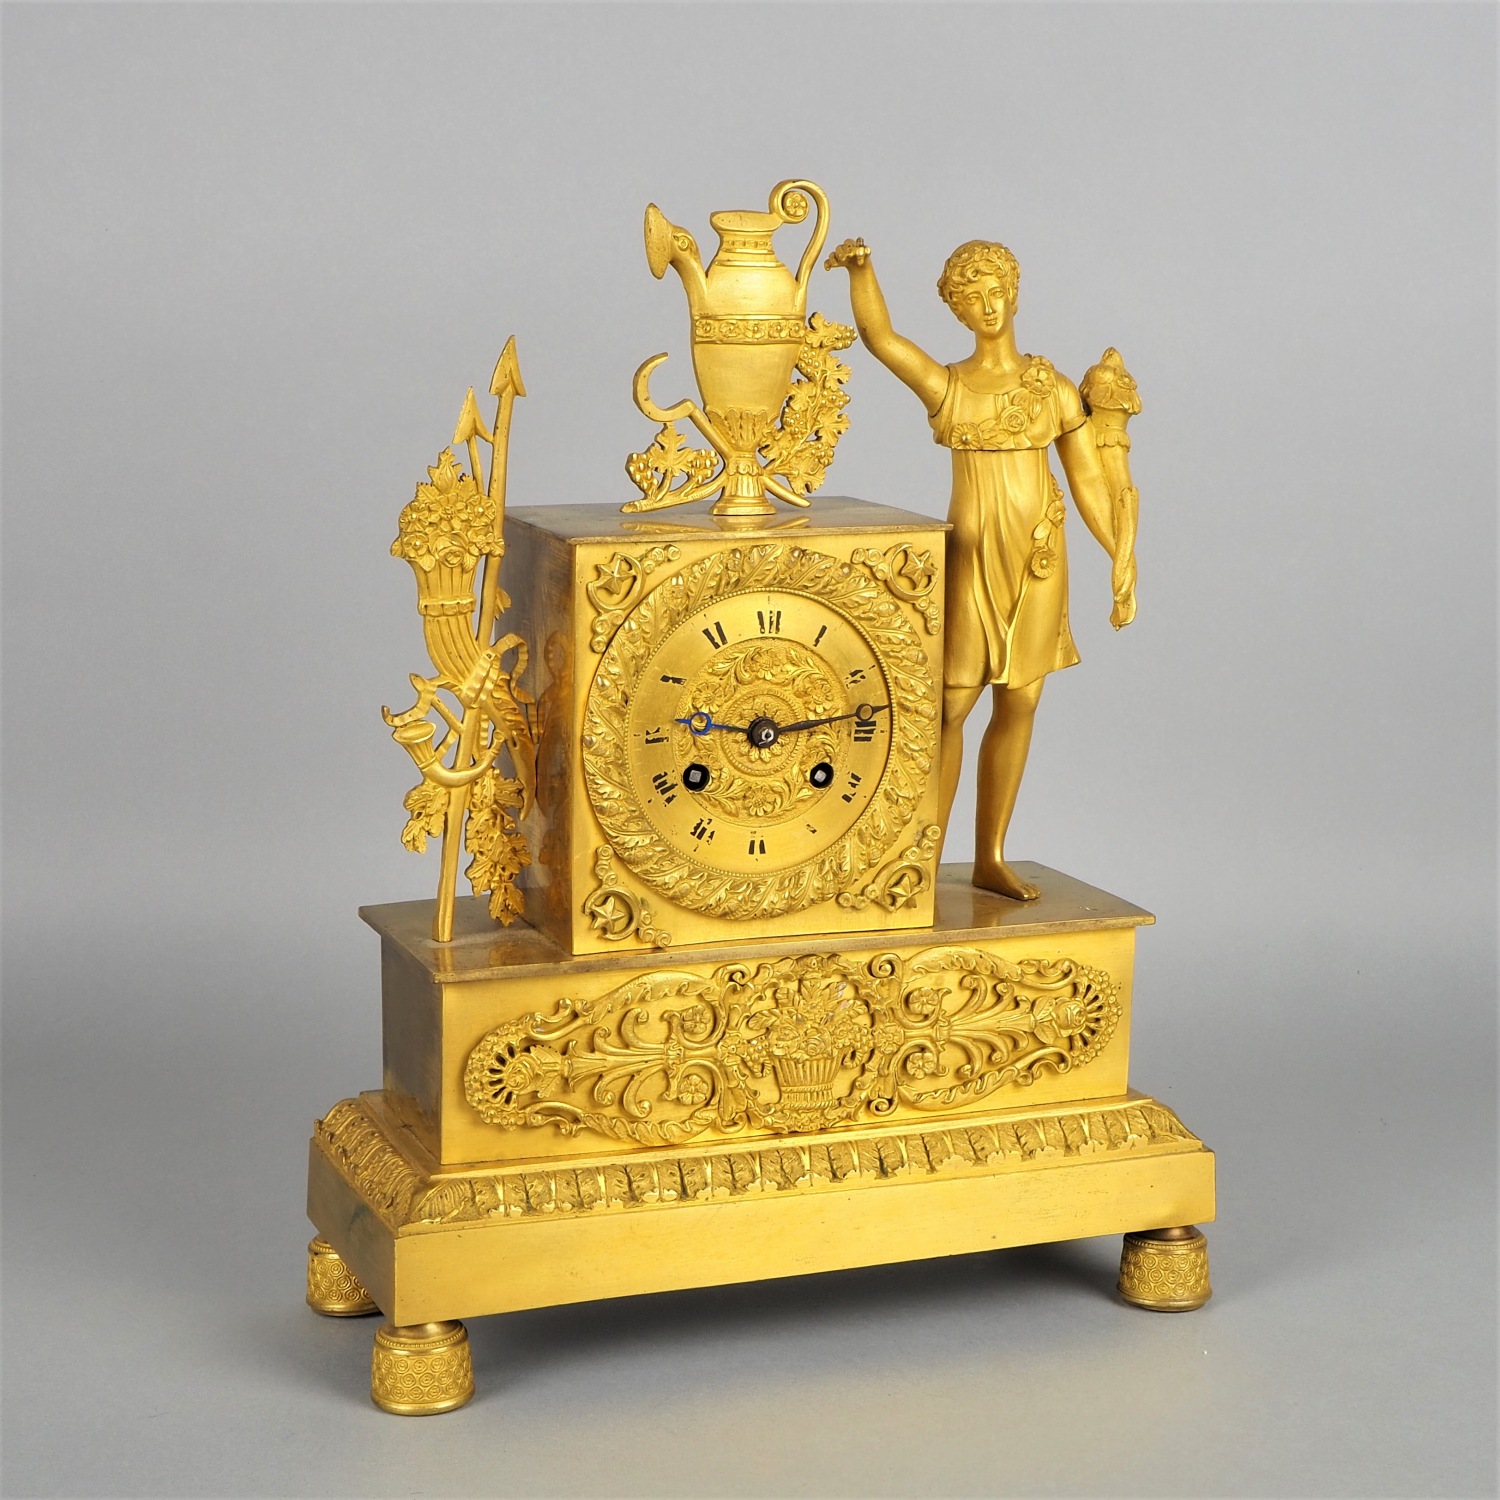 Classicist mantel clock, France around 1800